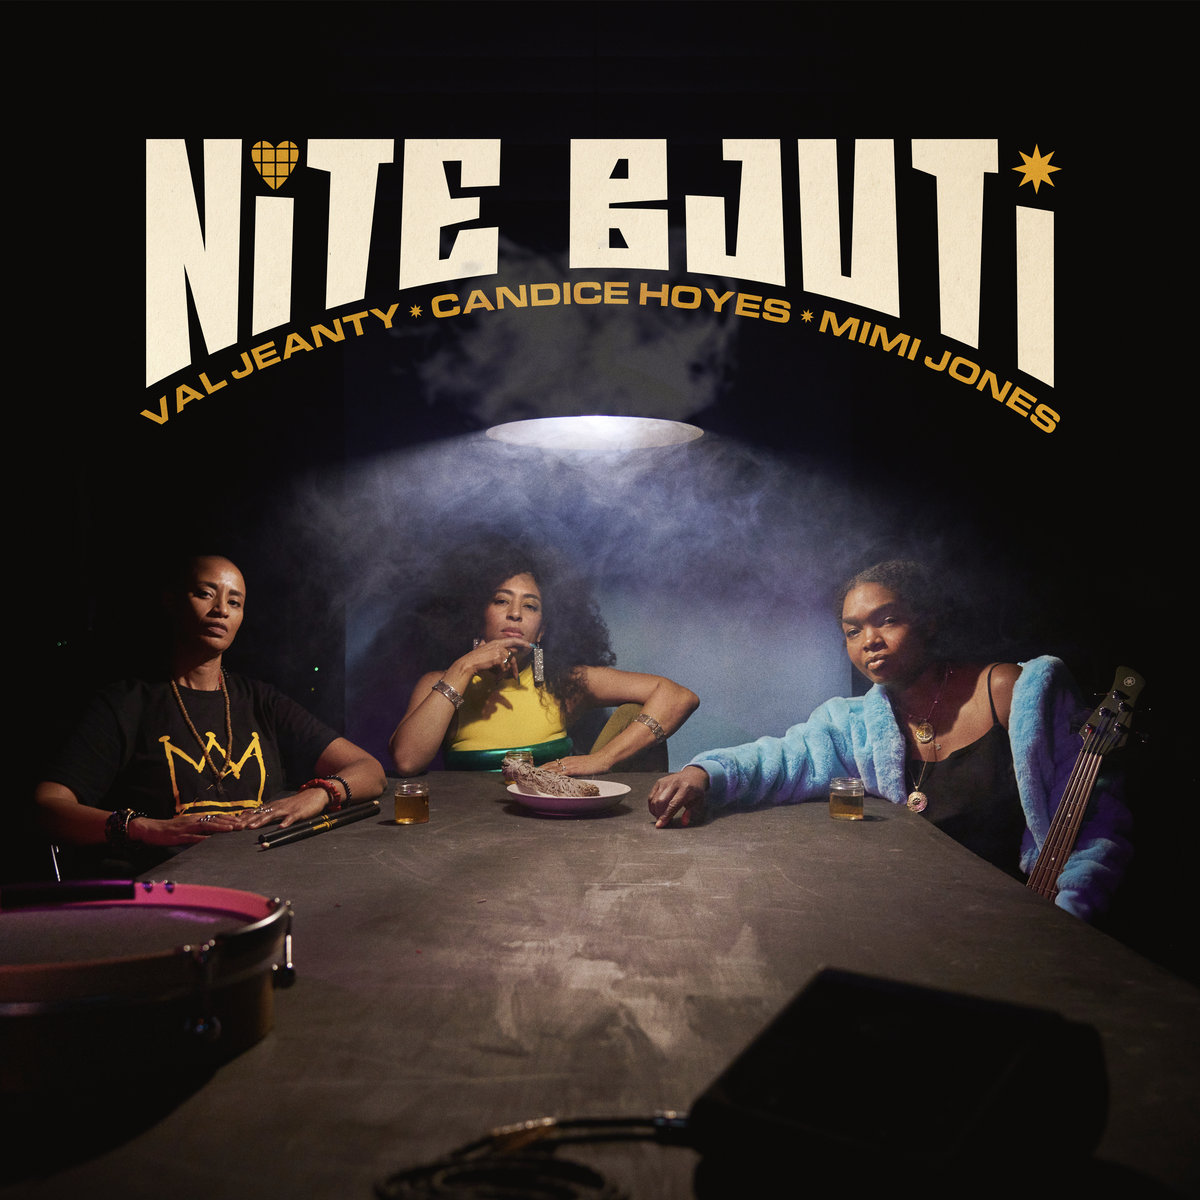 DEBUT ALBUM REVIEW: Nite Bjuti by Nite Bjuti